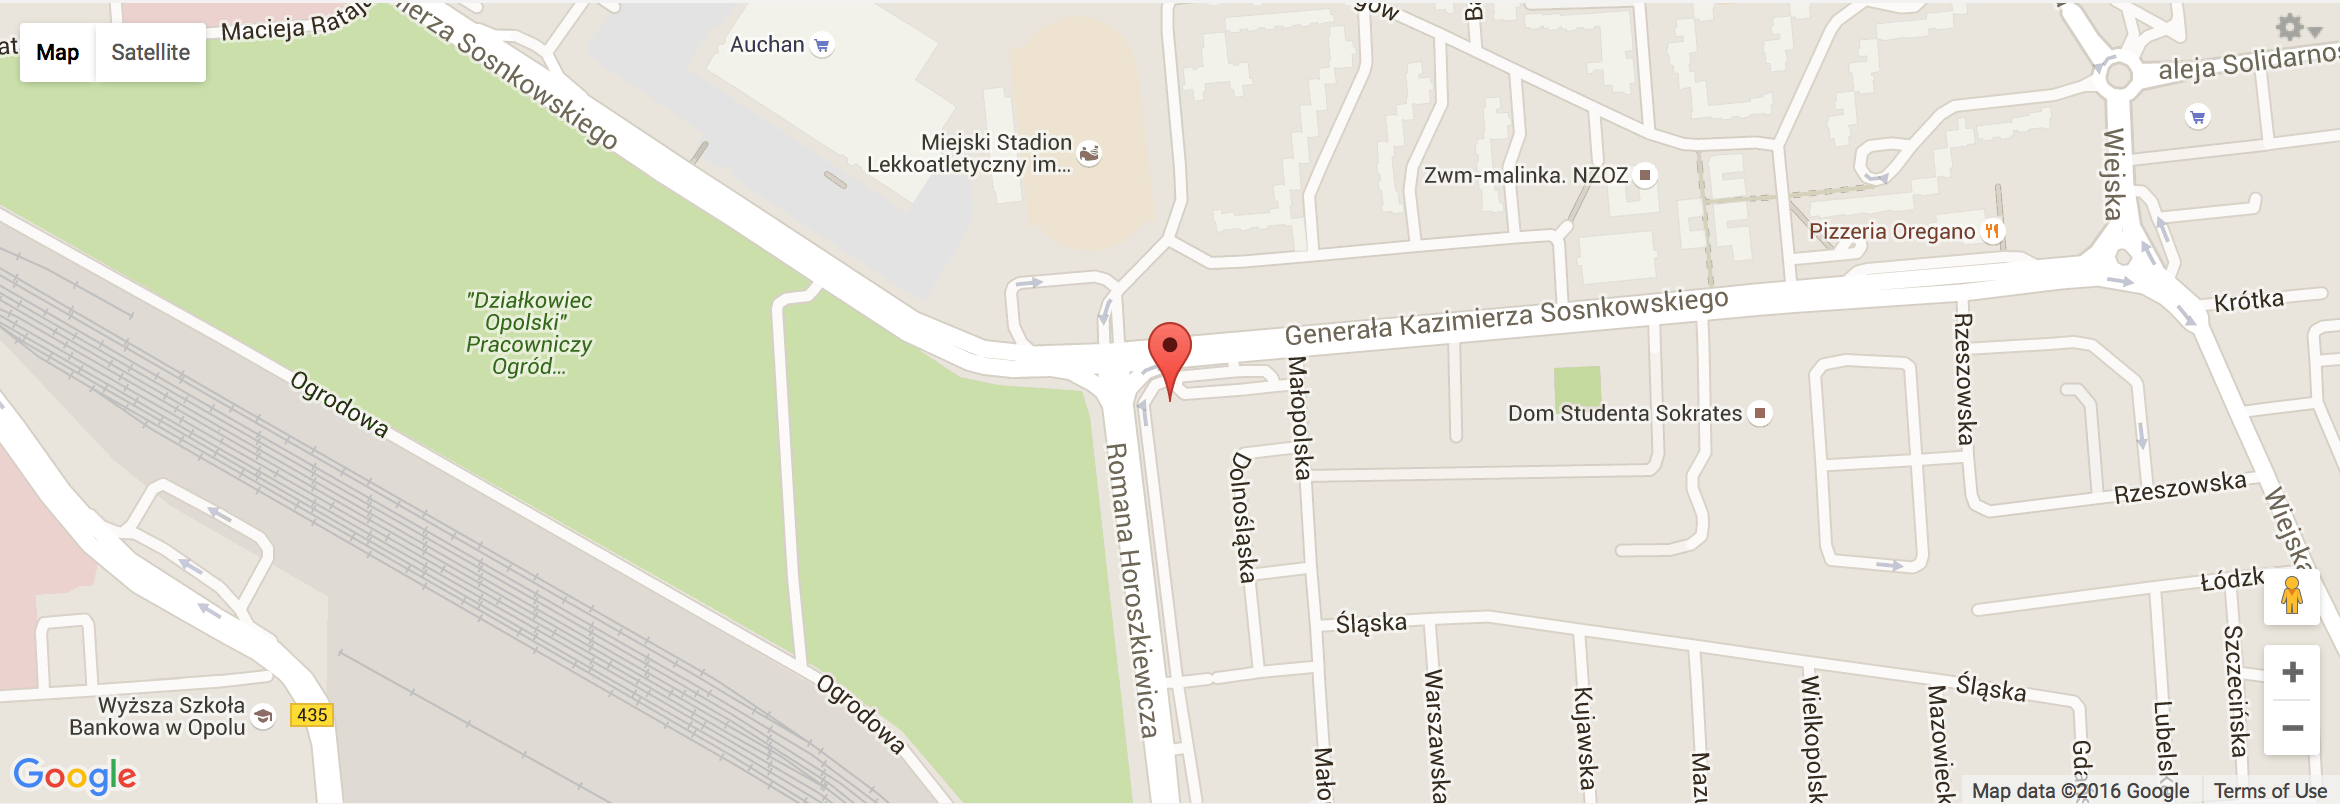 Opole Agglomeration Association - Localization on map